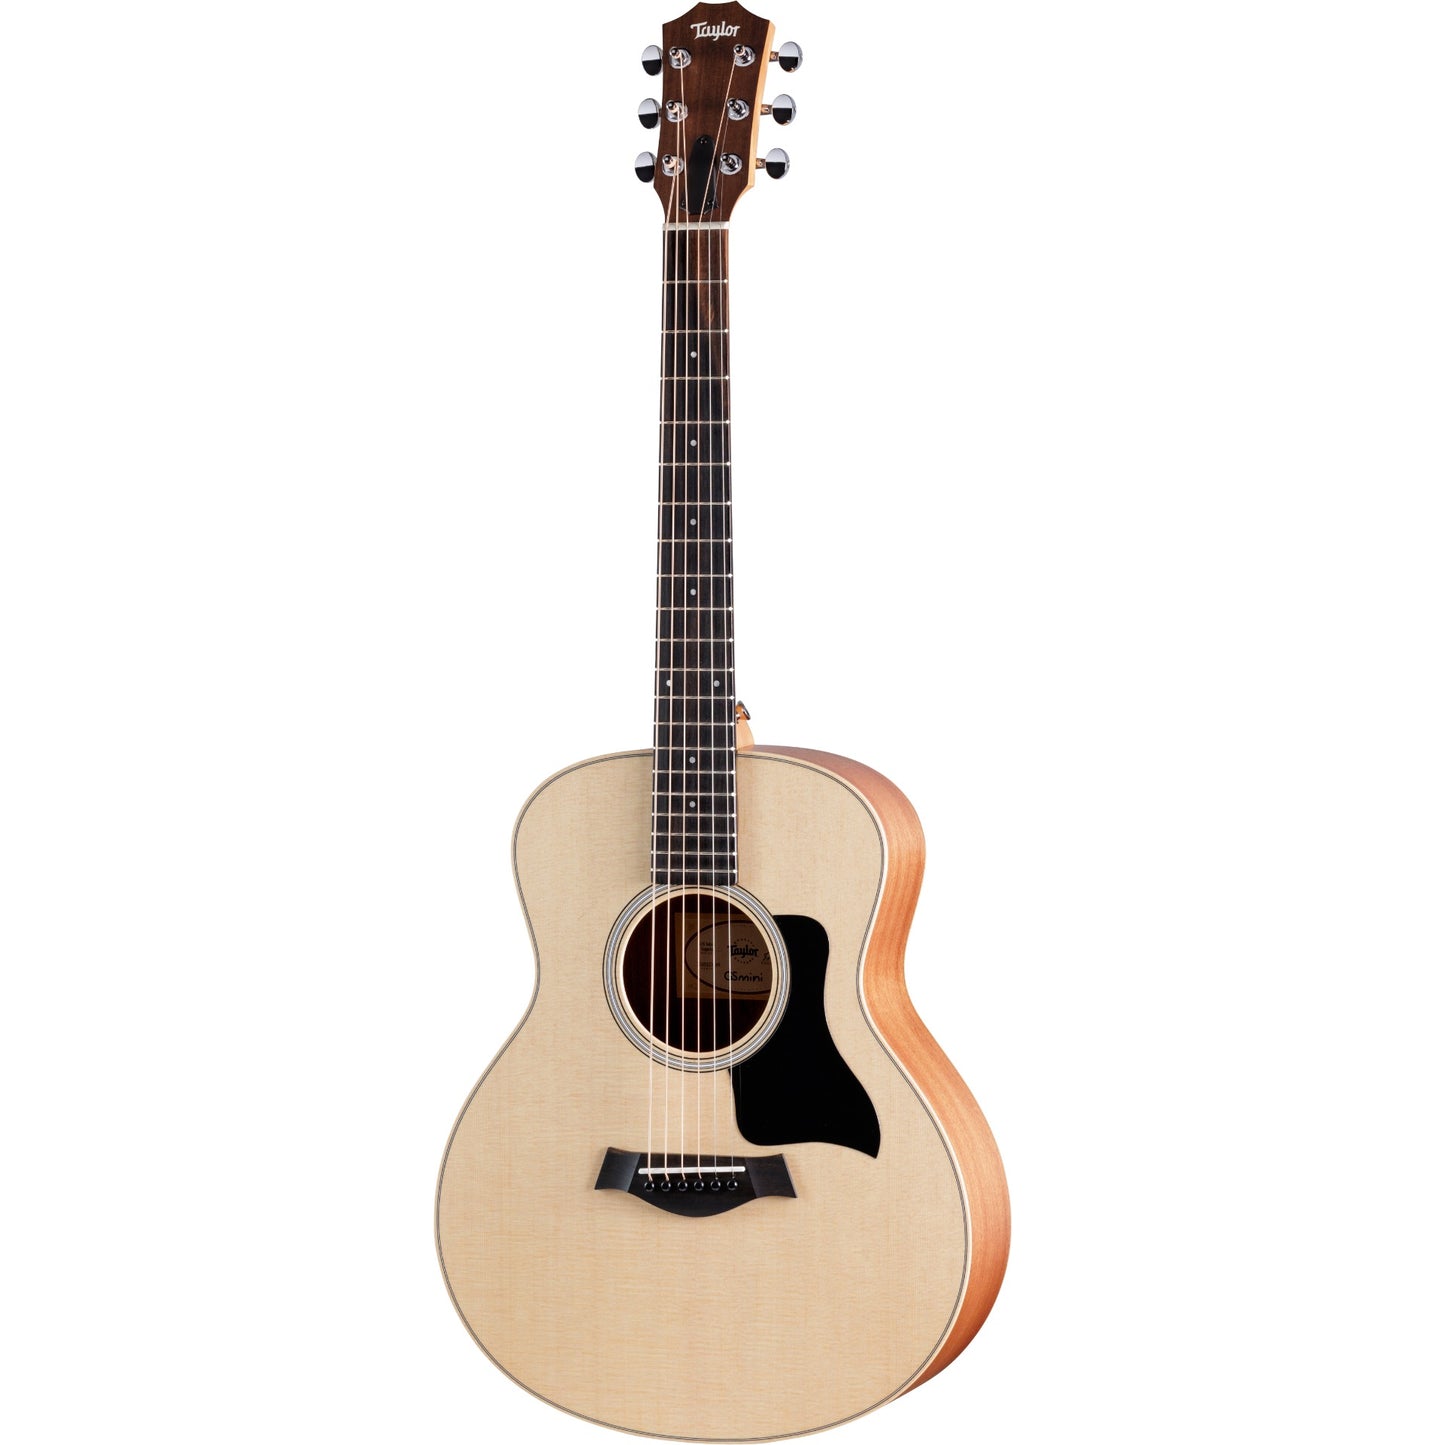 Taylor GS Mini Sapele Acoustic Guitar - Natural, Black Pickguard